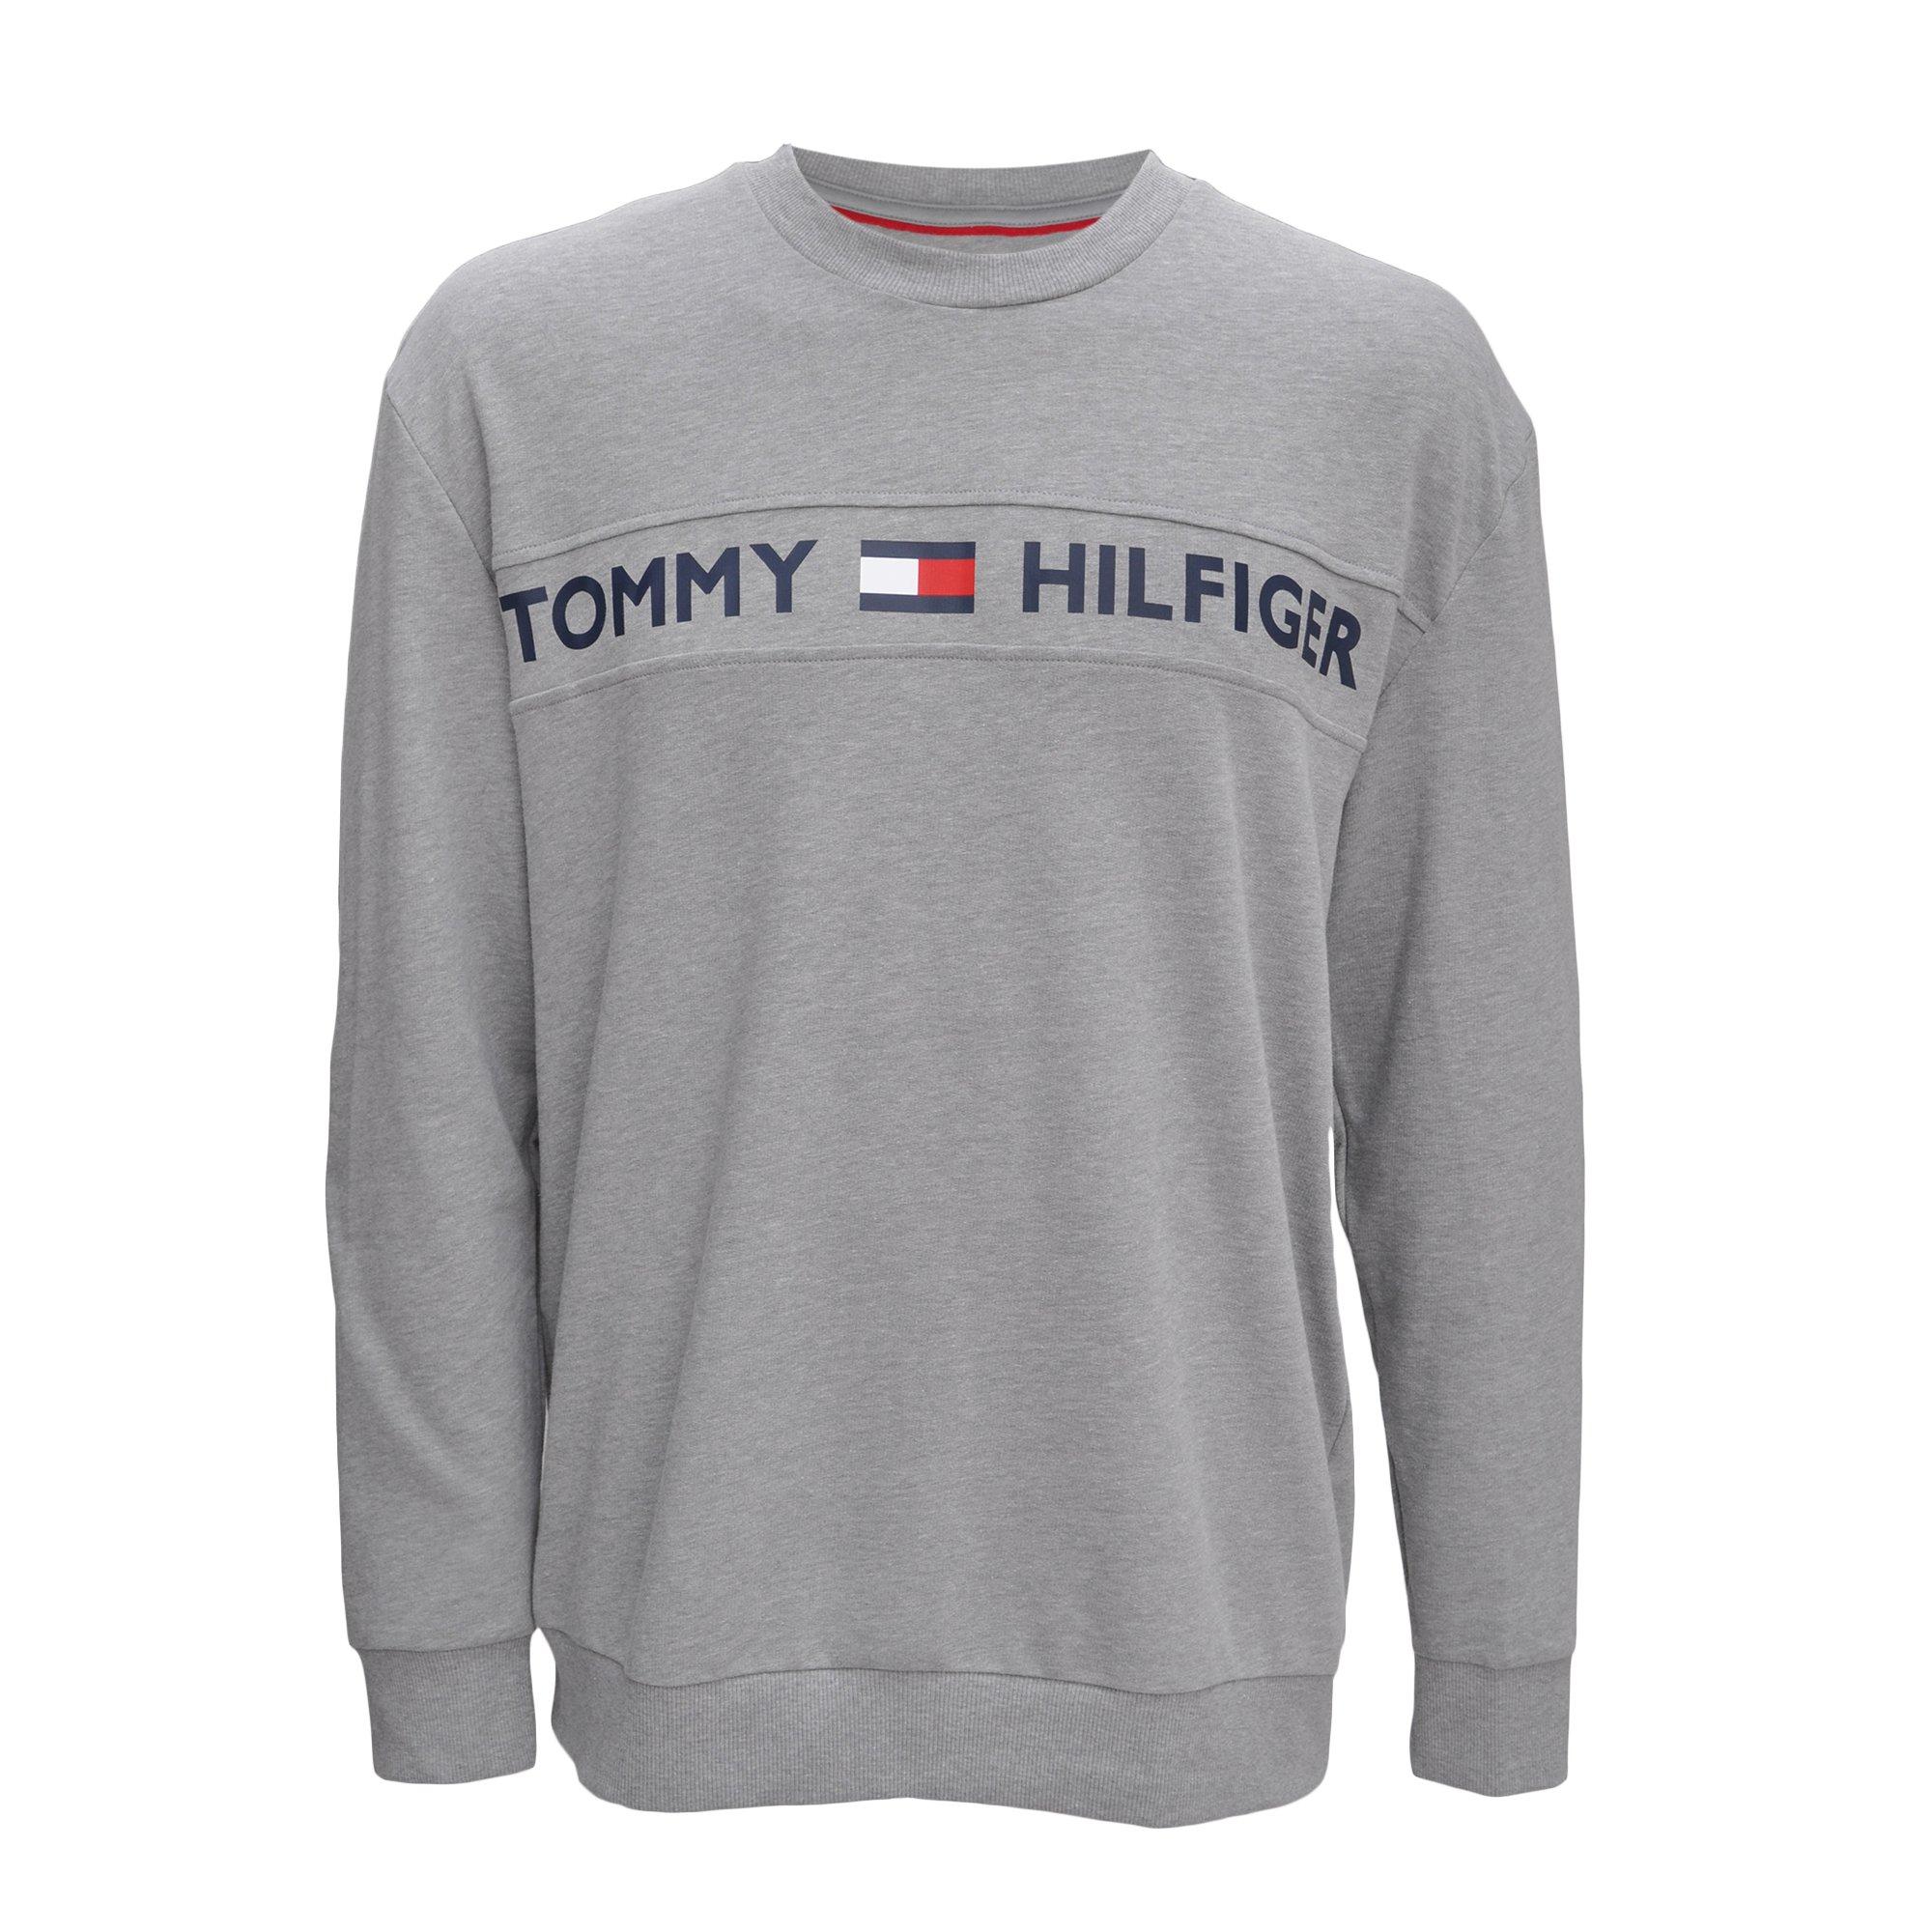 tommy hilfiger long sleeve grey